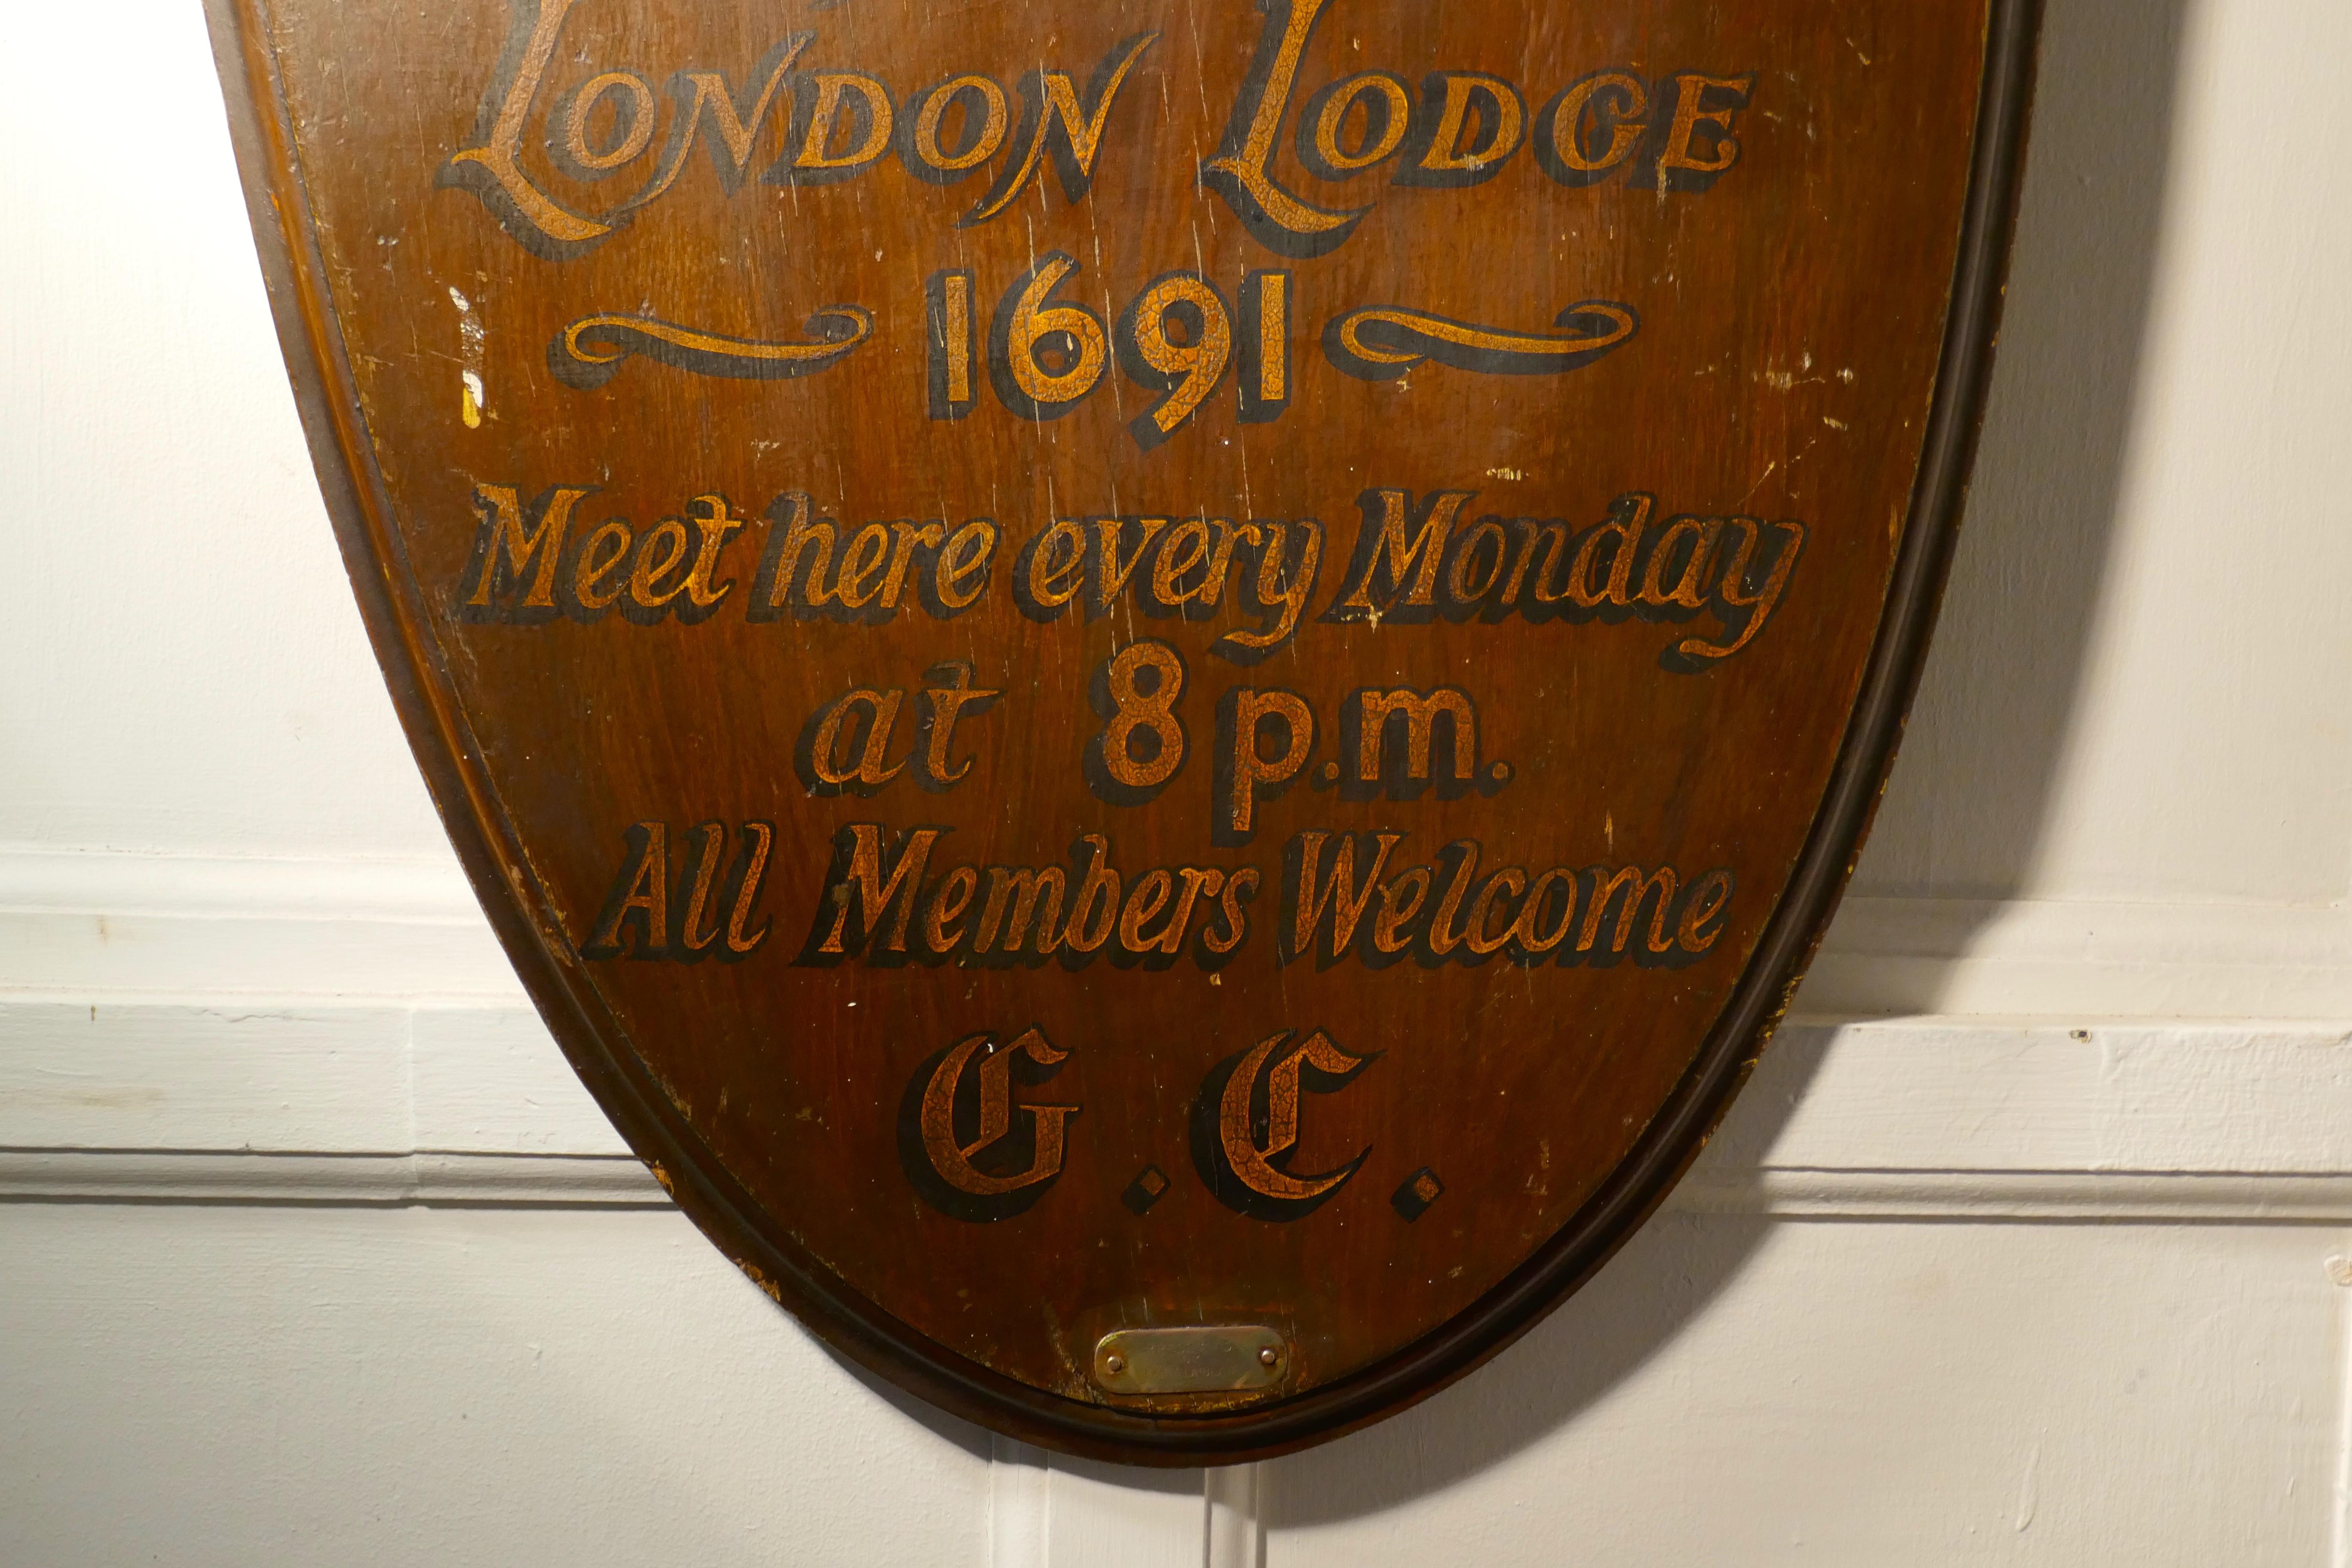 Victorian R.A.O.B Buffaloes, New London Lodge 1691, Oak Wall Plaque / Shield